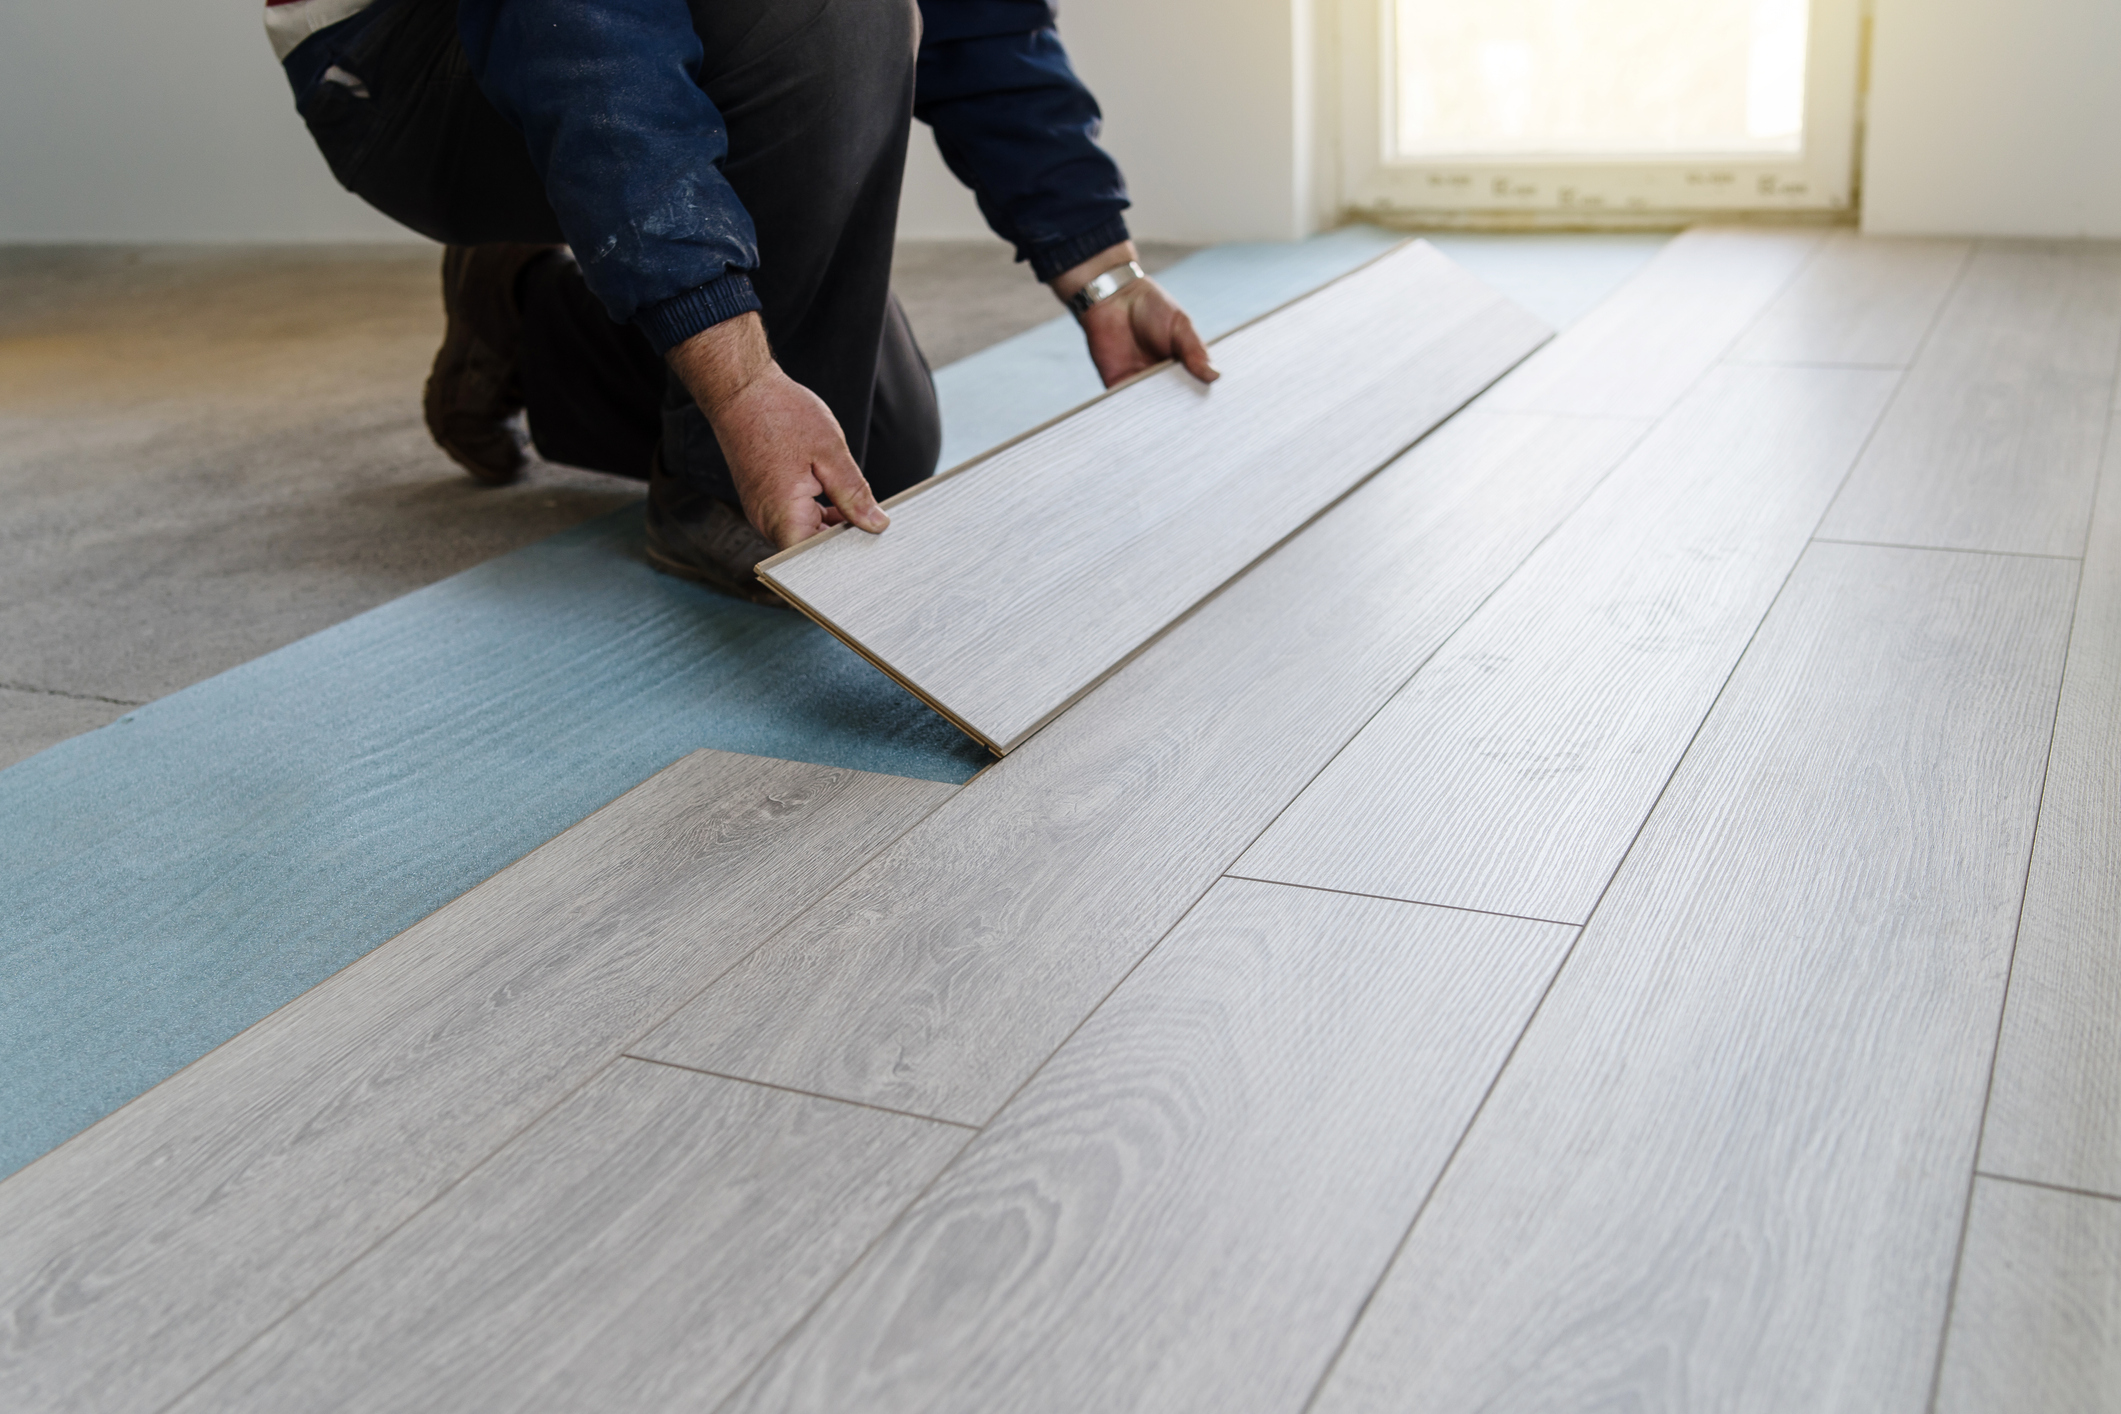 Temporary Flooring Ideas, Can You Lay Laminate Flooring Over Thin Carpet